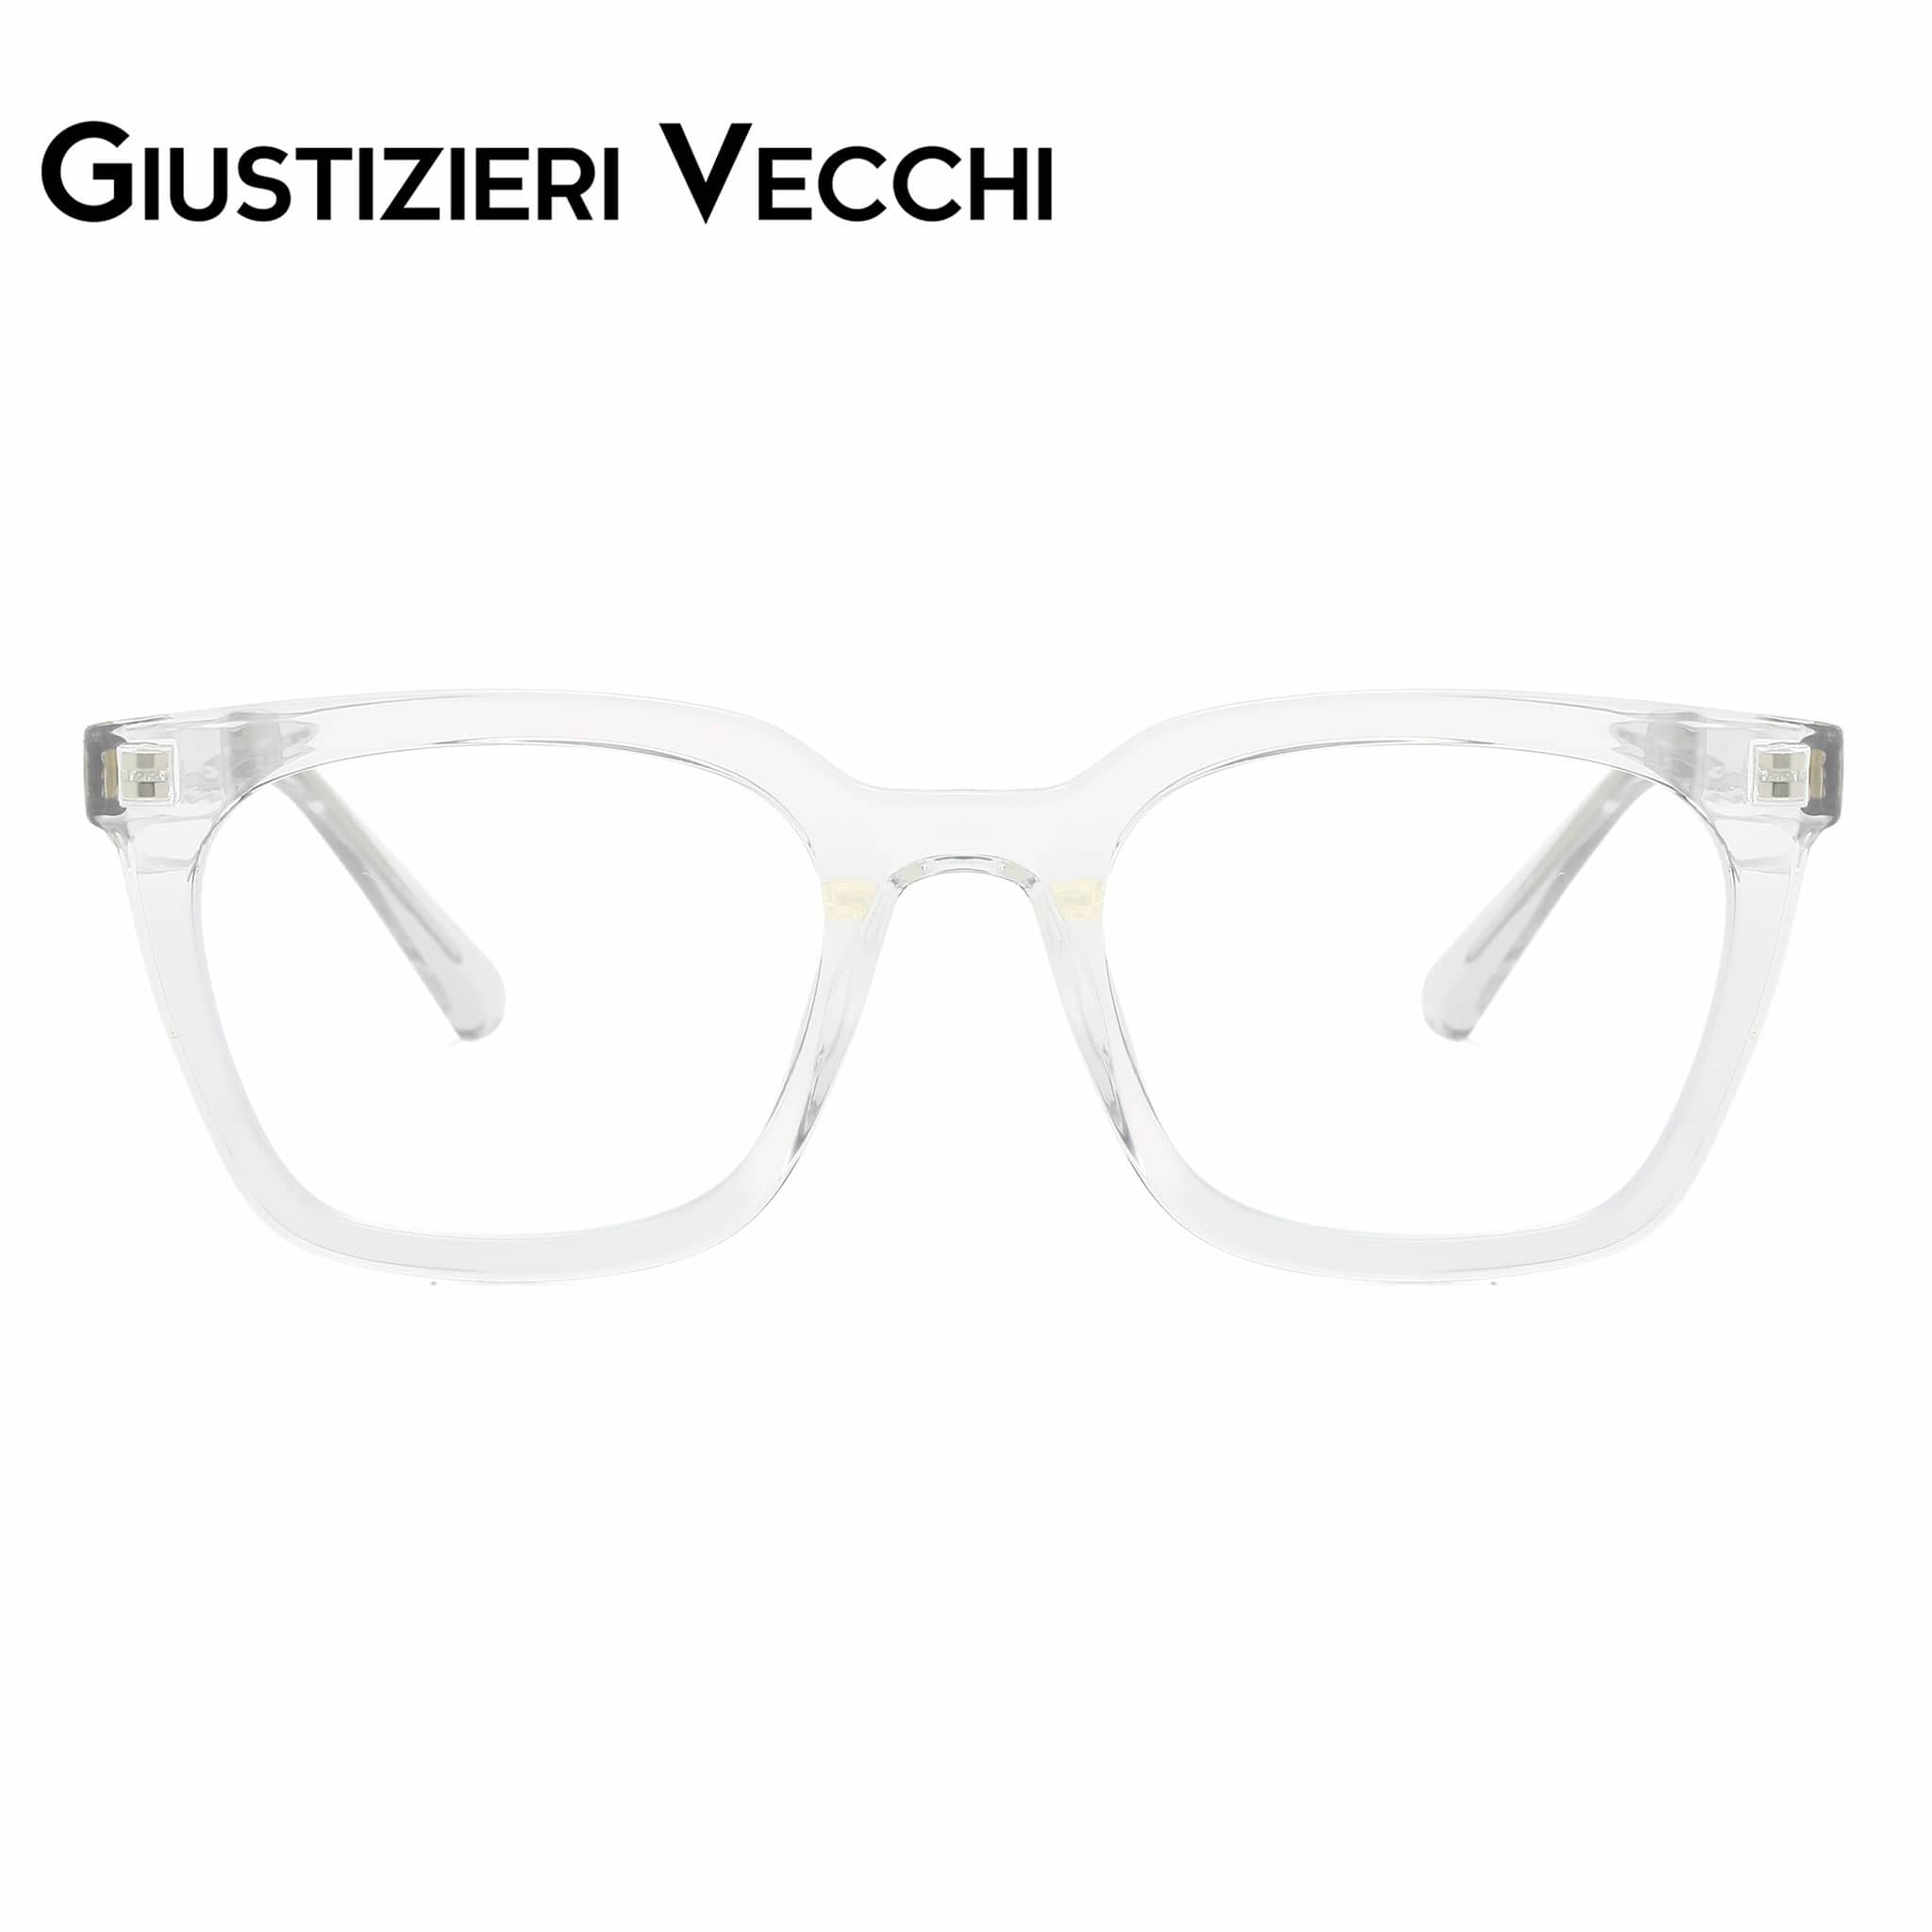 GIUSTIZIERI VECCHI Eyeglasses Medium / Clear Crystal PhantomPulse Duo